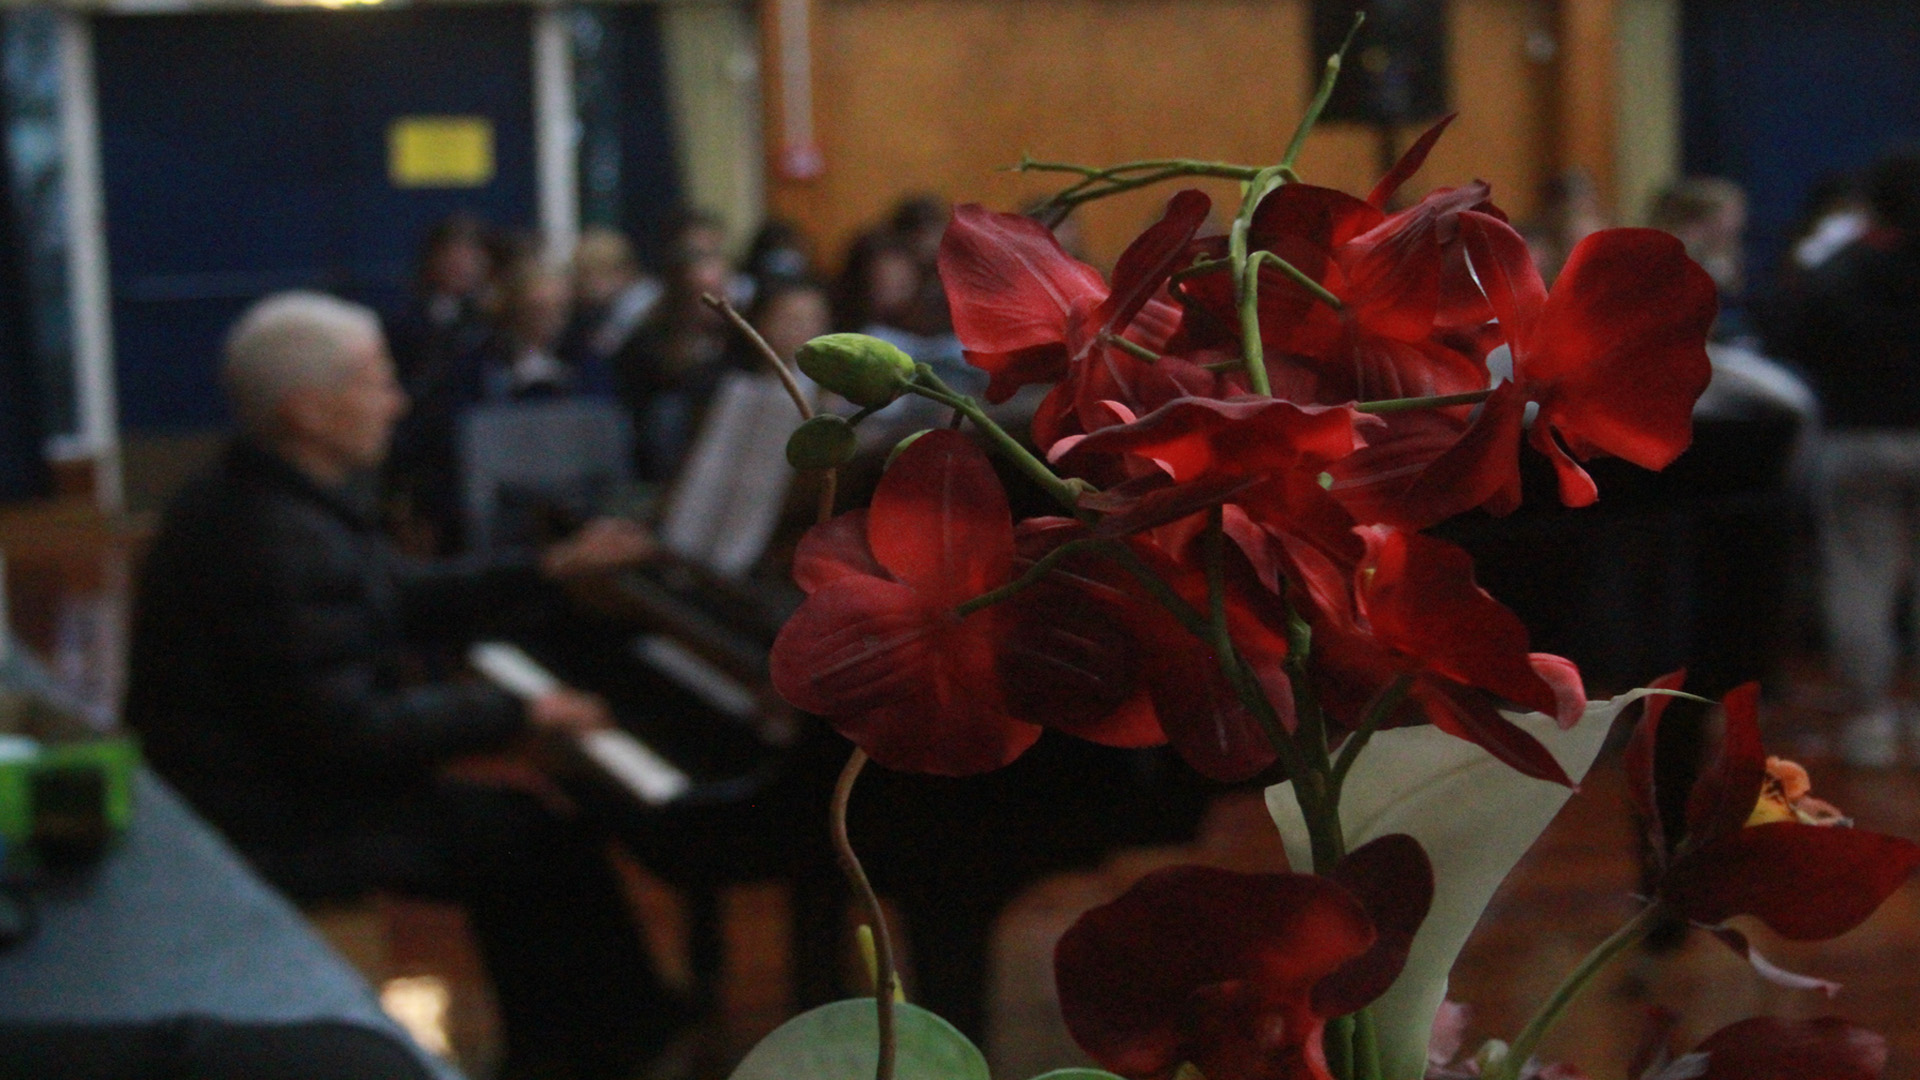 Mr Burdan playing piano behind flowers - Image courtesy of Kaita Hummel